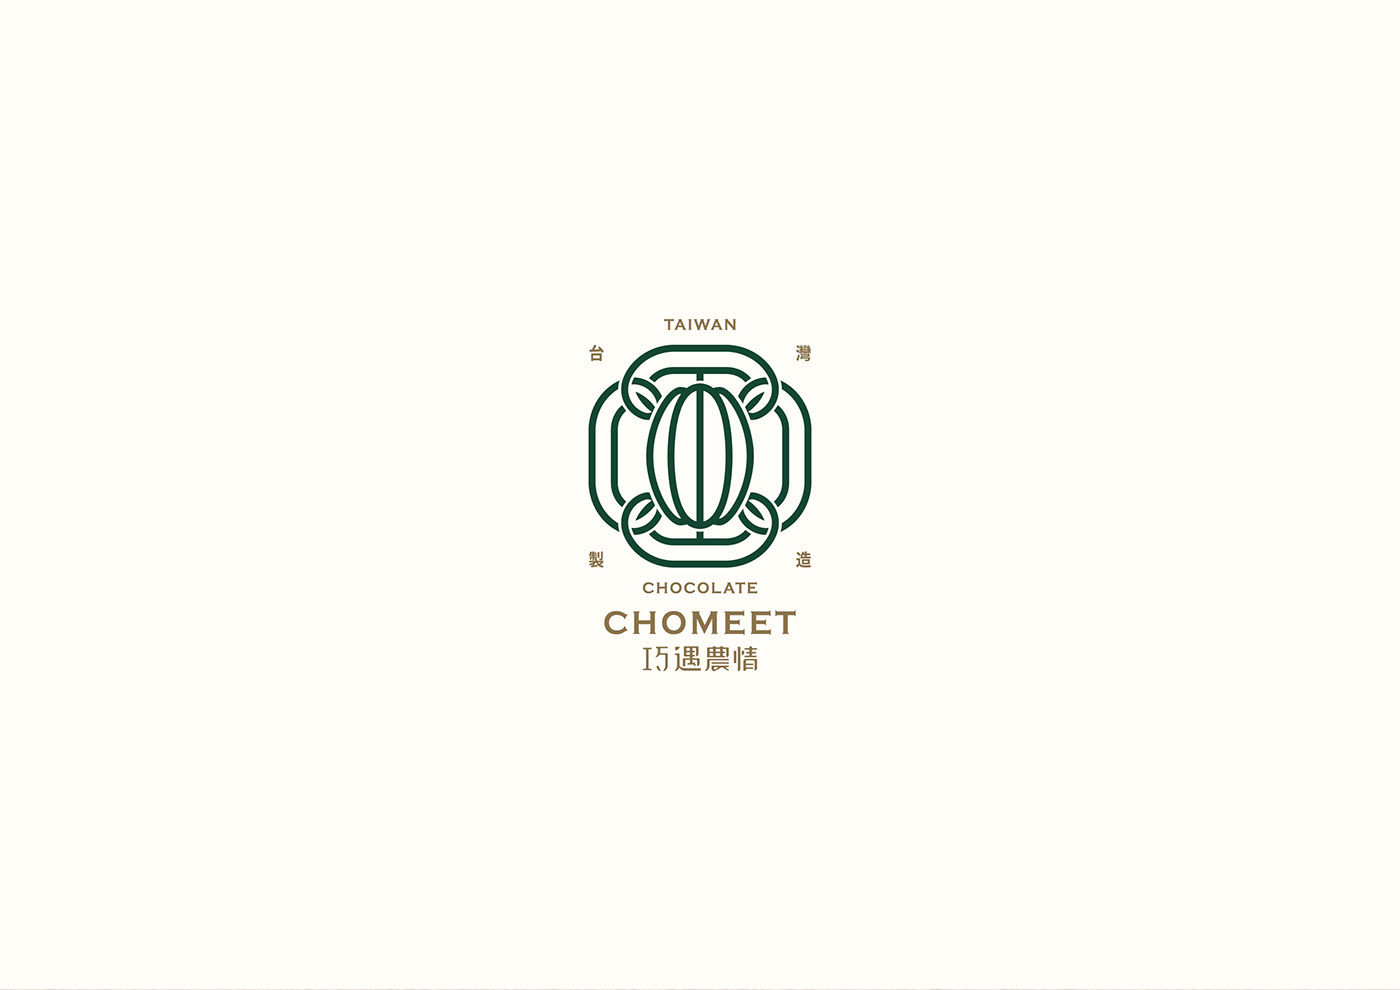 chocolate chomeet logo package taiwan 包裝 品牌 巧克力 巧遇農情 branding 